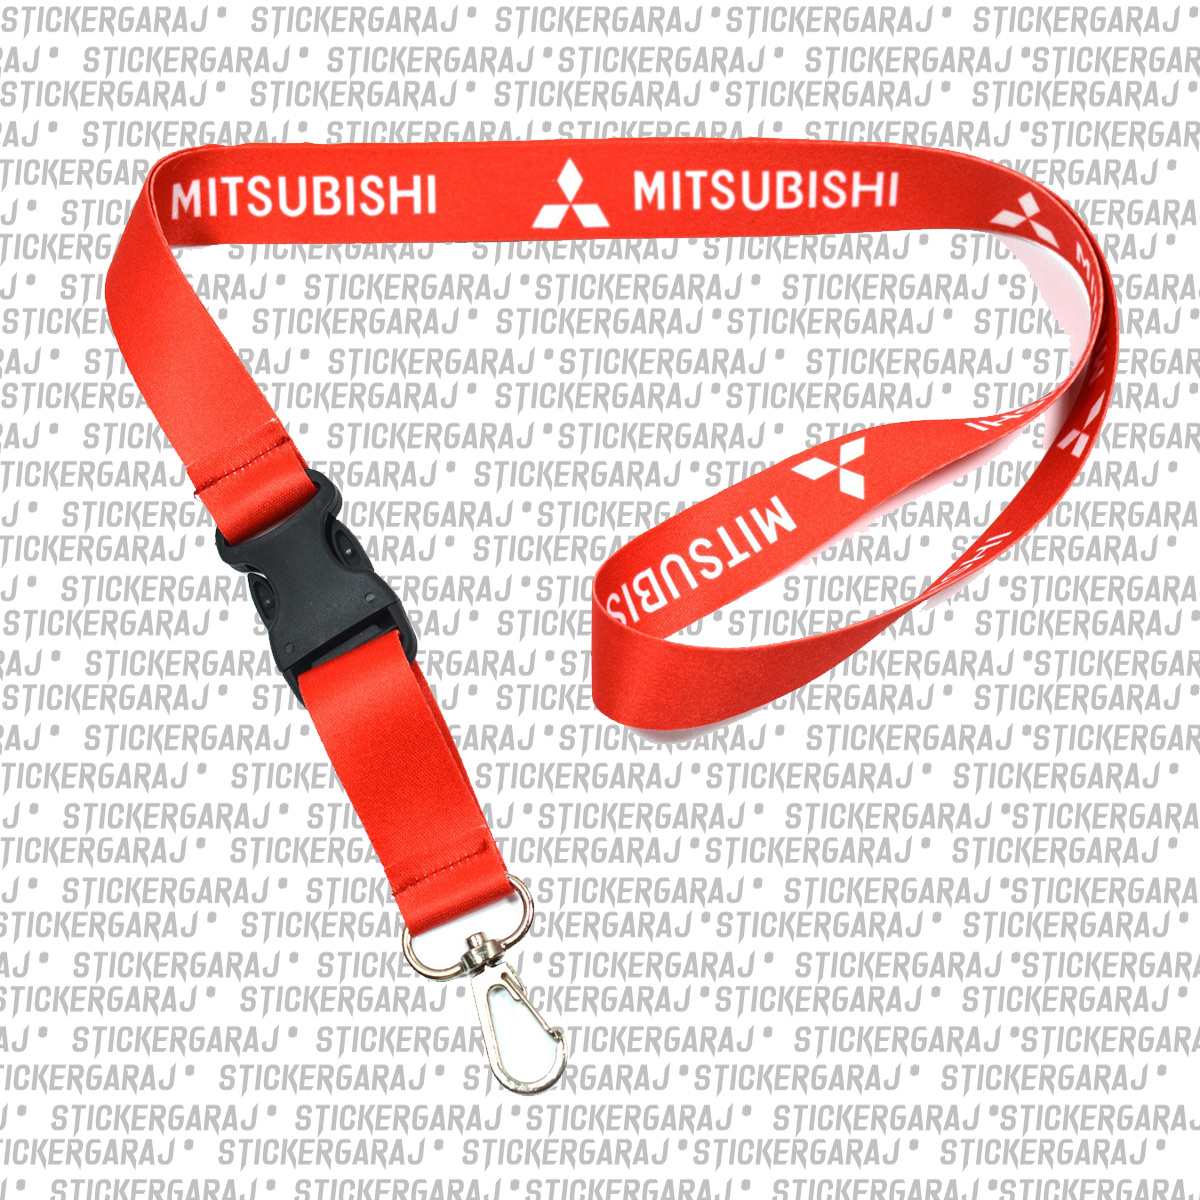 Mitsubishi anahtarlik - Mitsubishi ayna boyun ipi - Baskılı